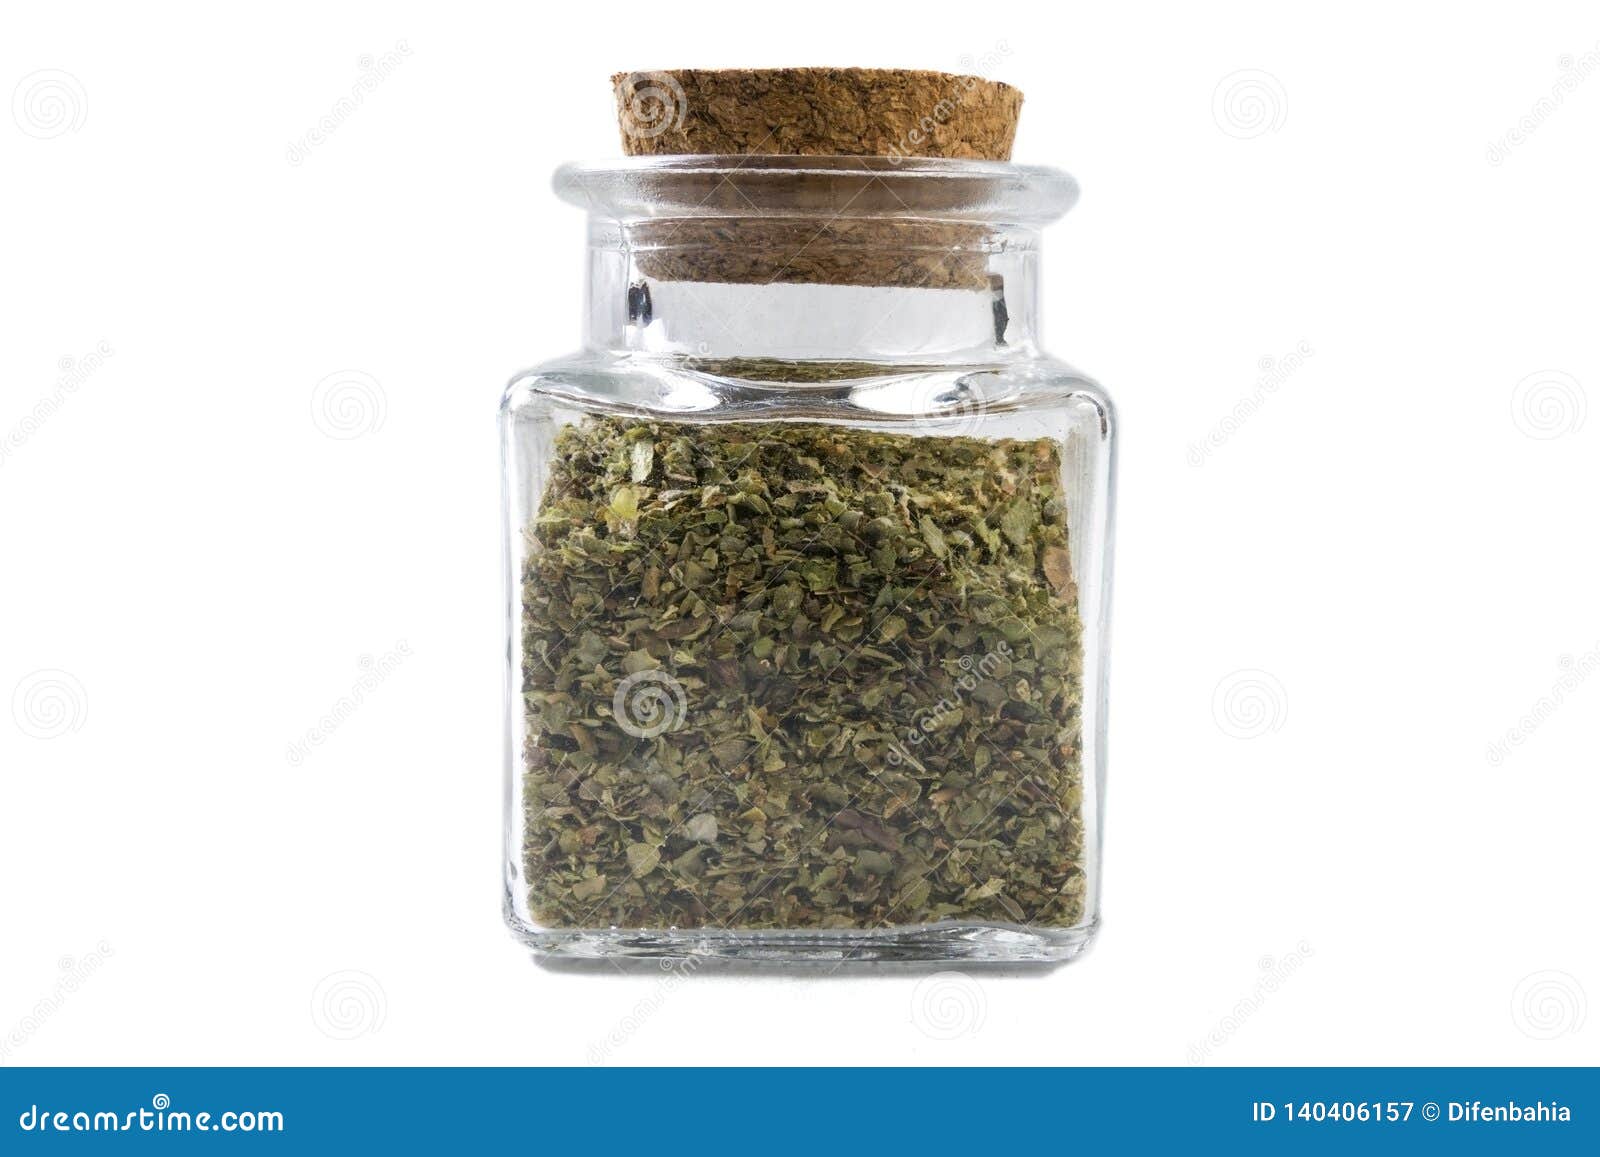 marjoram herb in a glass jar  on white background